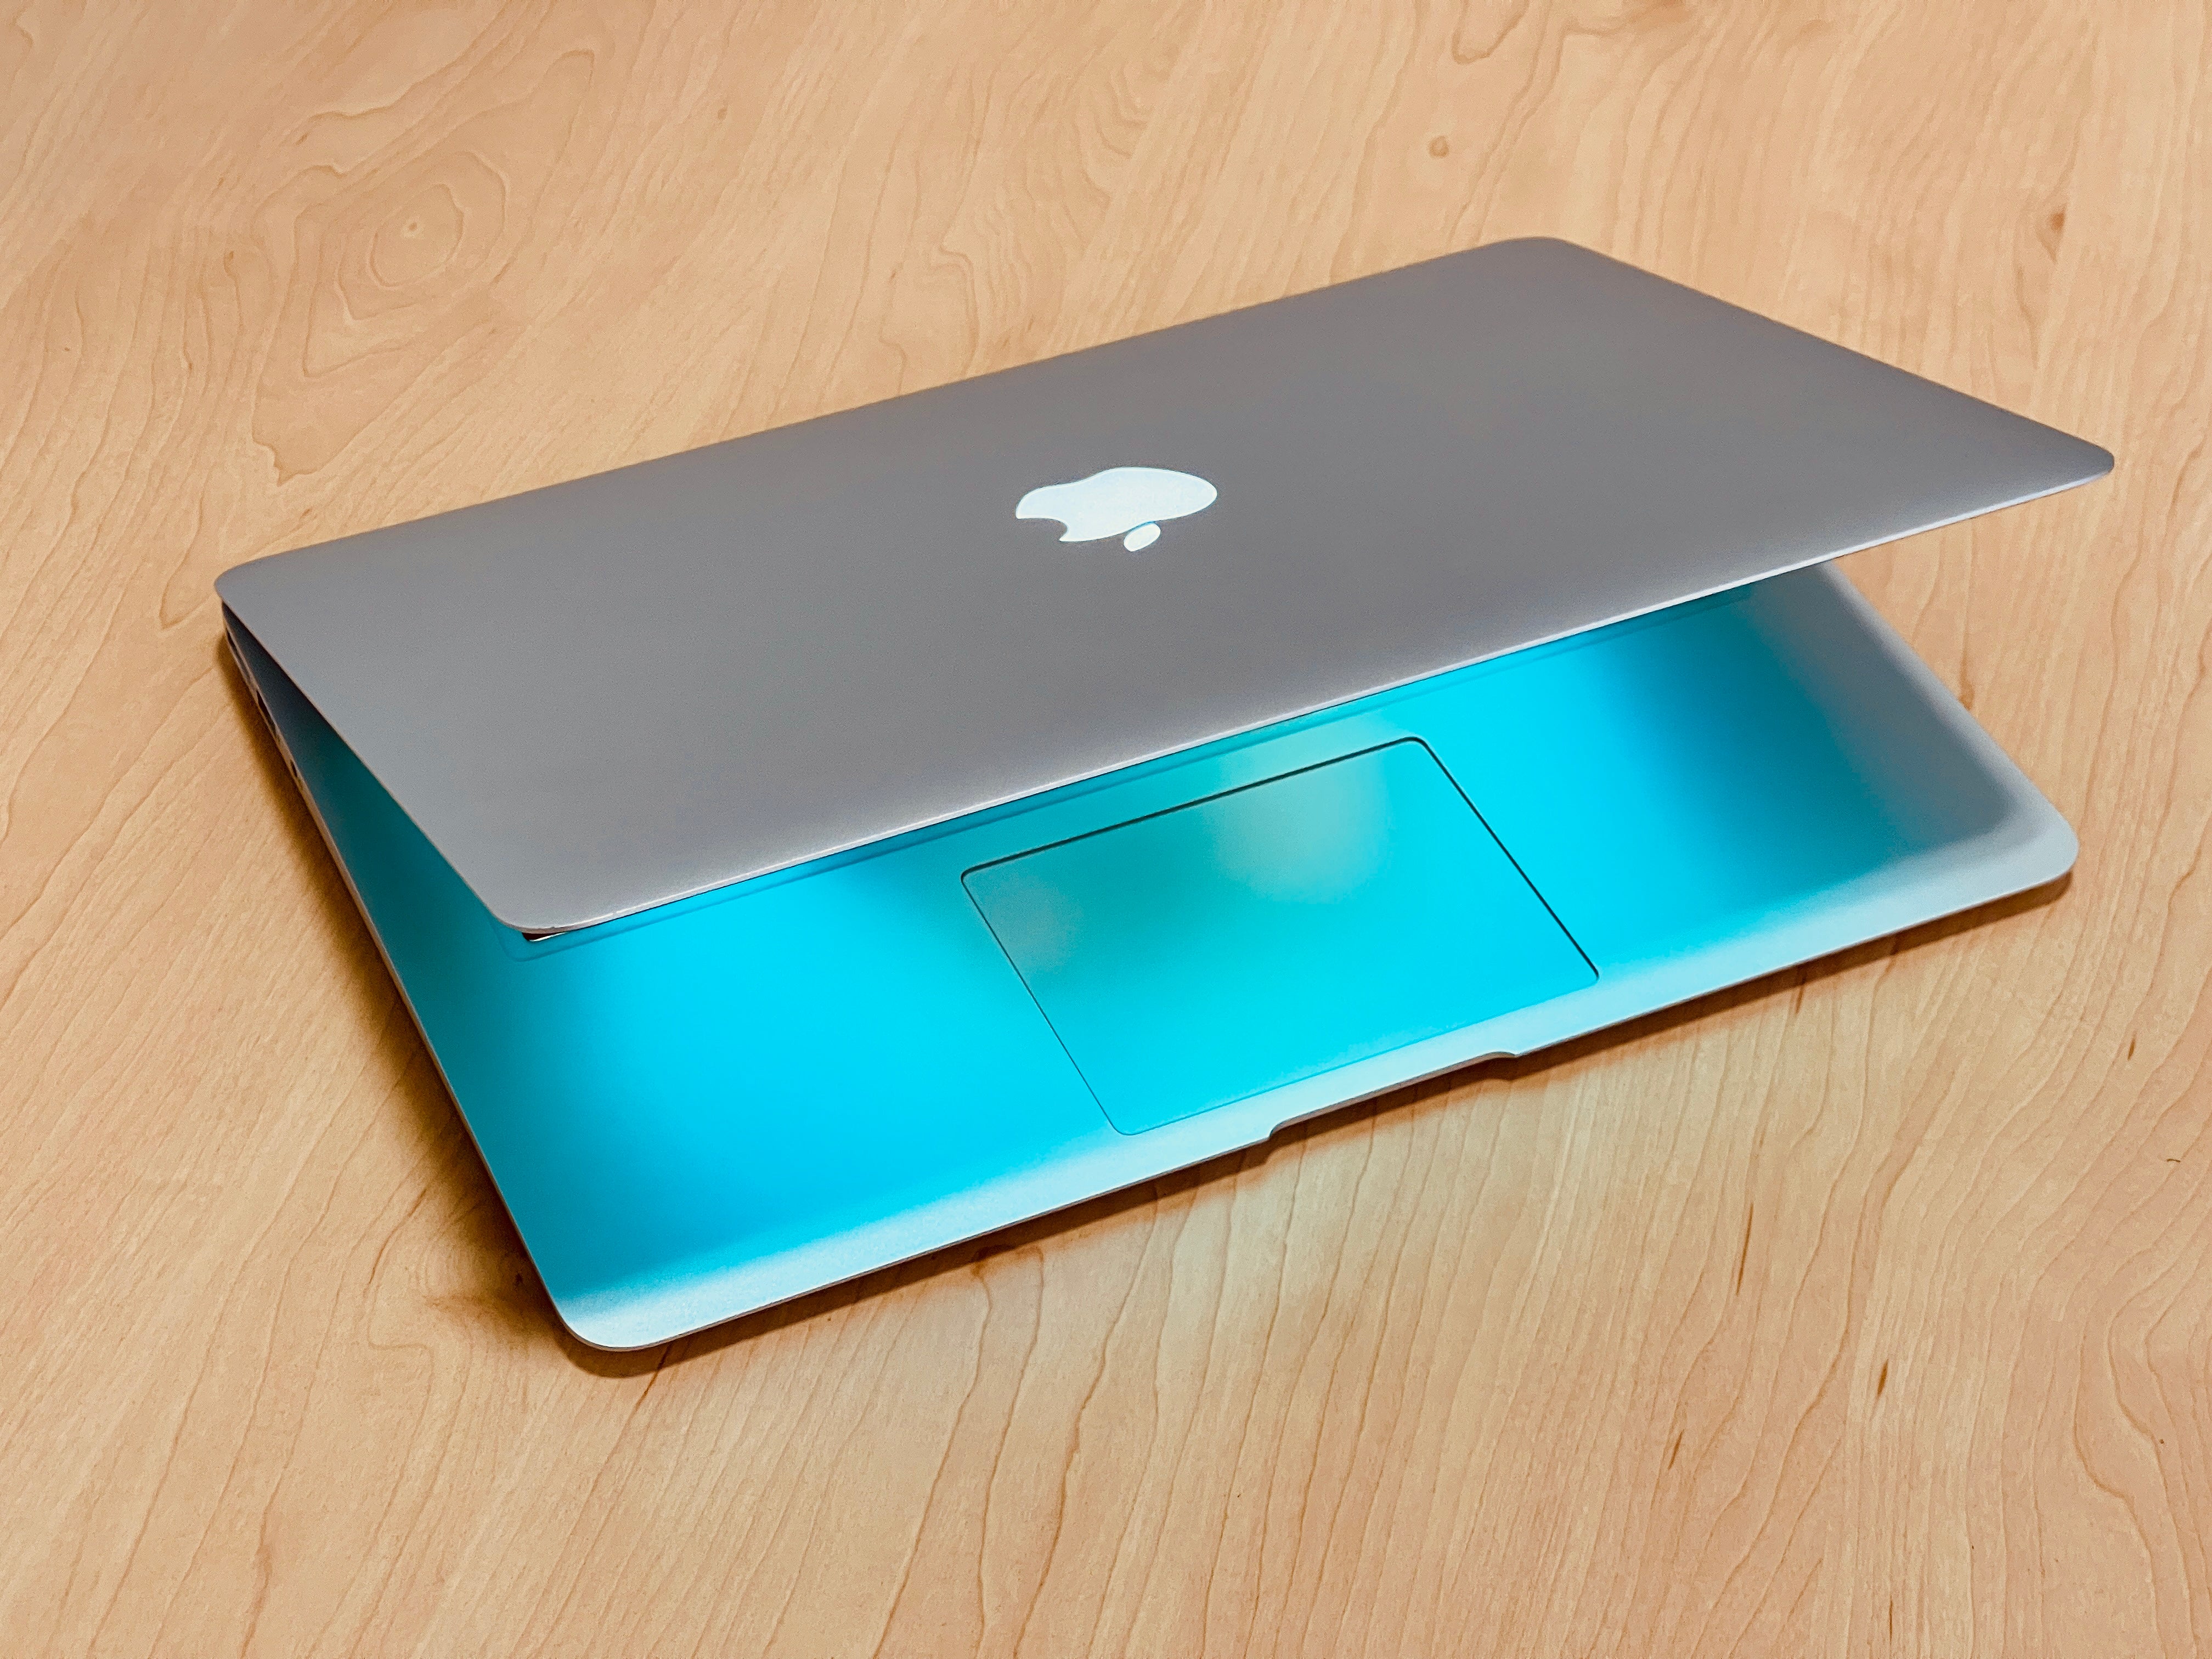 Apple MacBook Air 13-inch 1.3GHz Dual-Core i5 (4GB RAM, 128GB SSD, Silver) - Pre Owned / 3 Month Warranty - Mac Shack